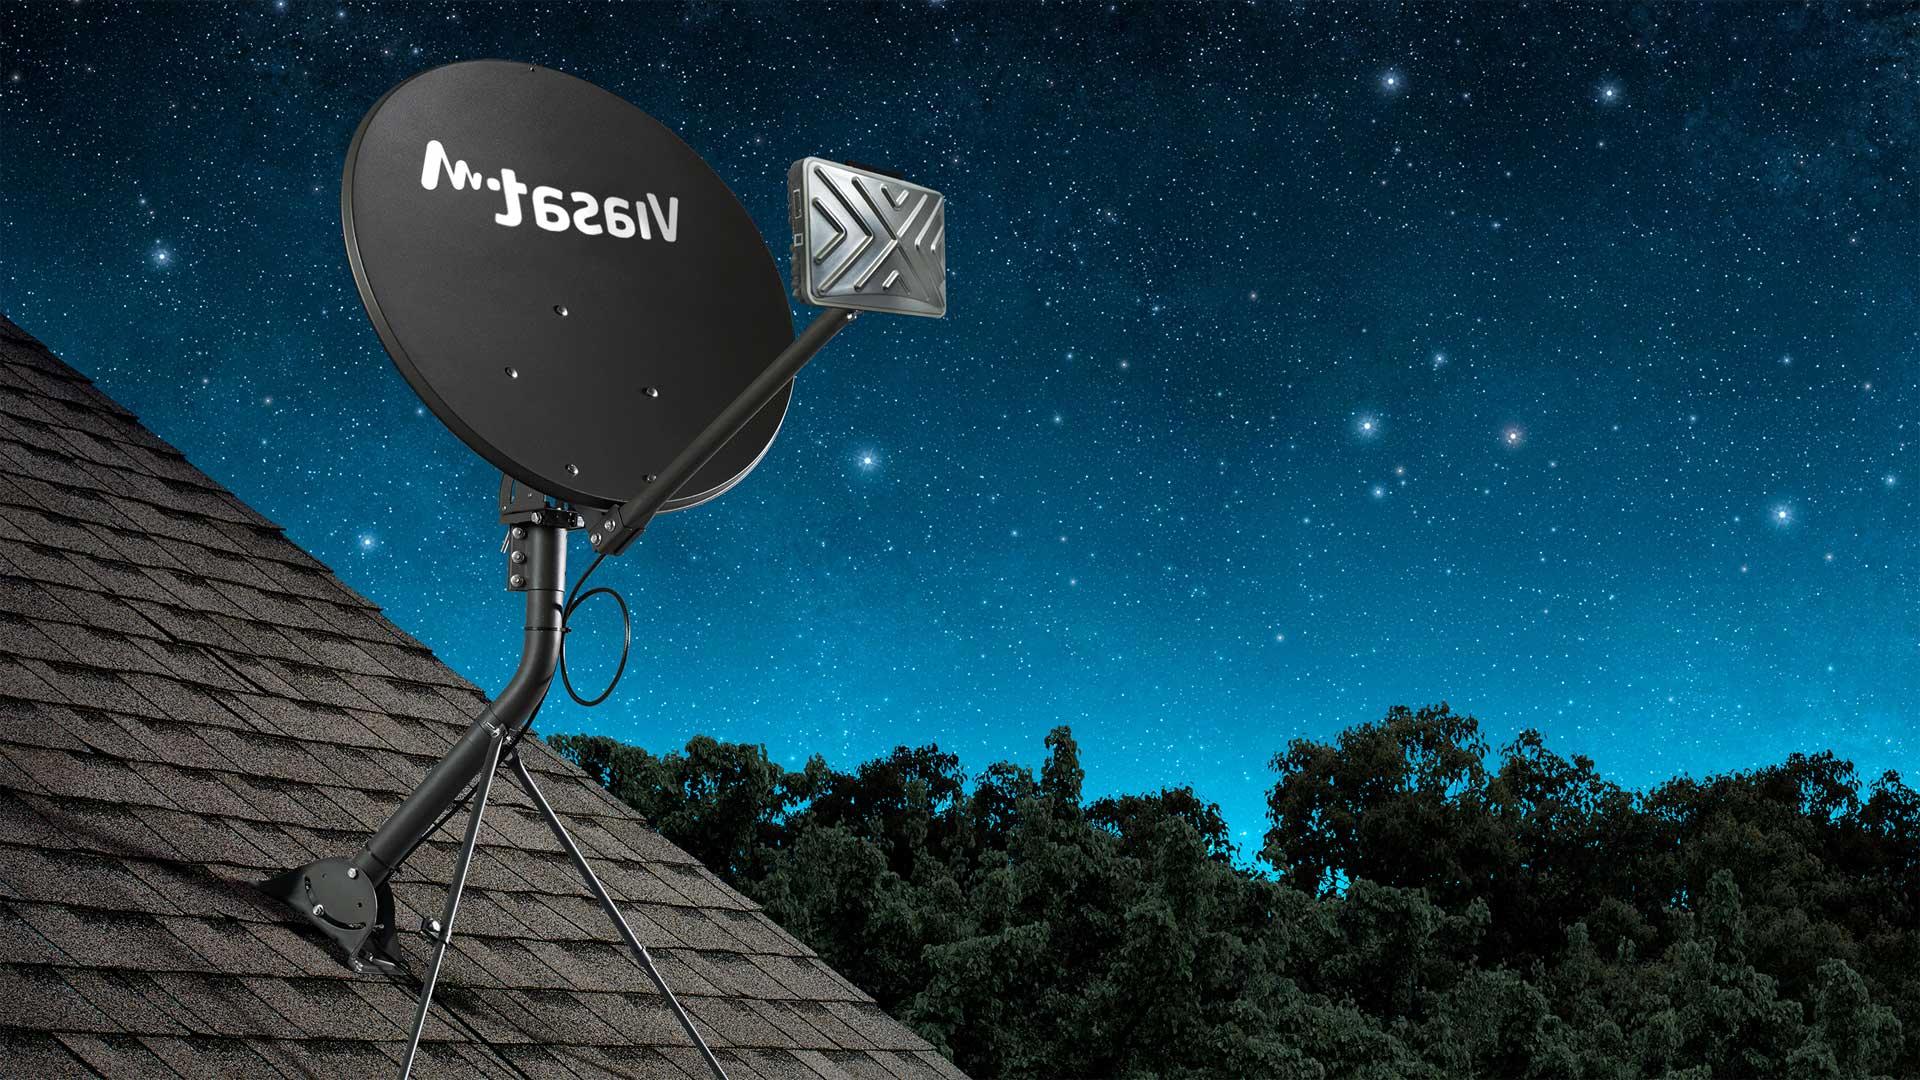 Viasat家庭卫星互联网天线安装在屋顶上